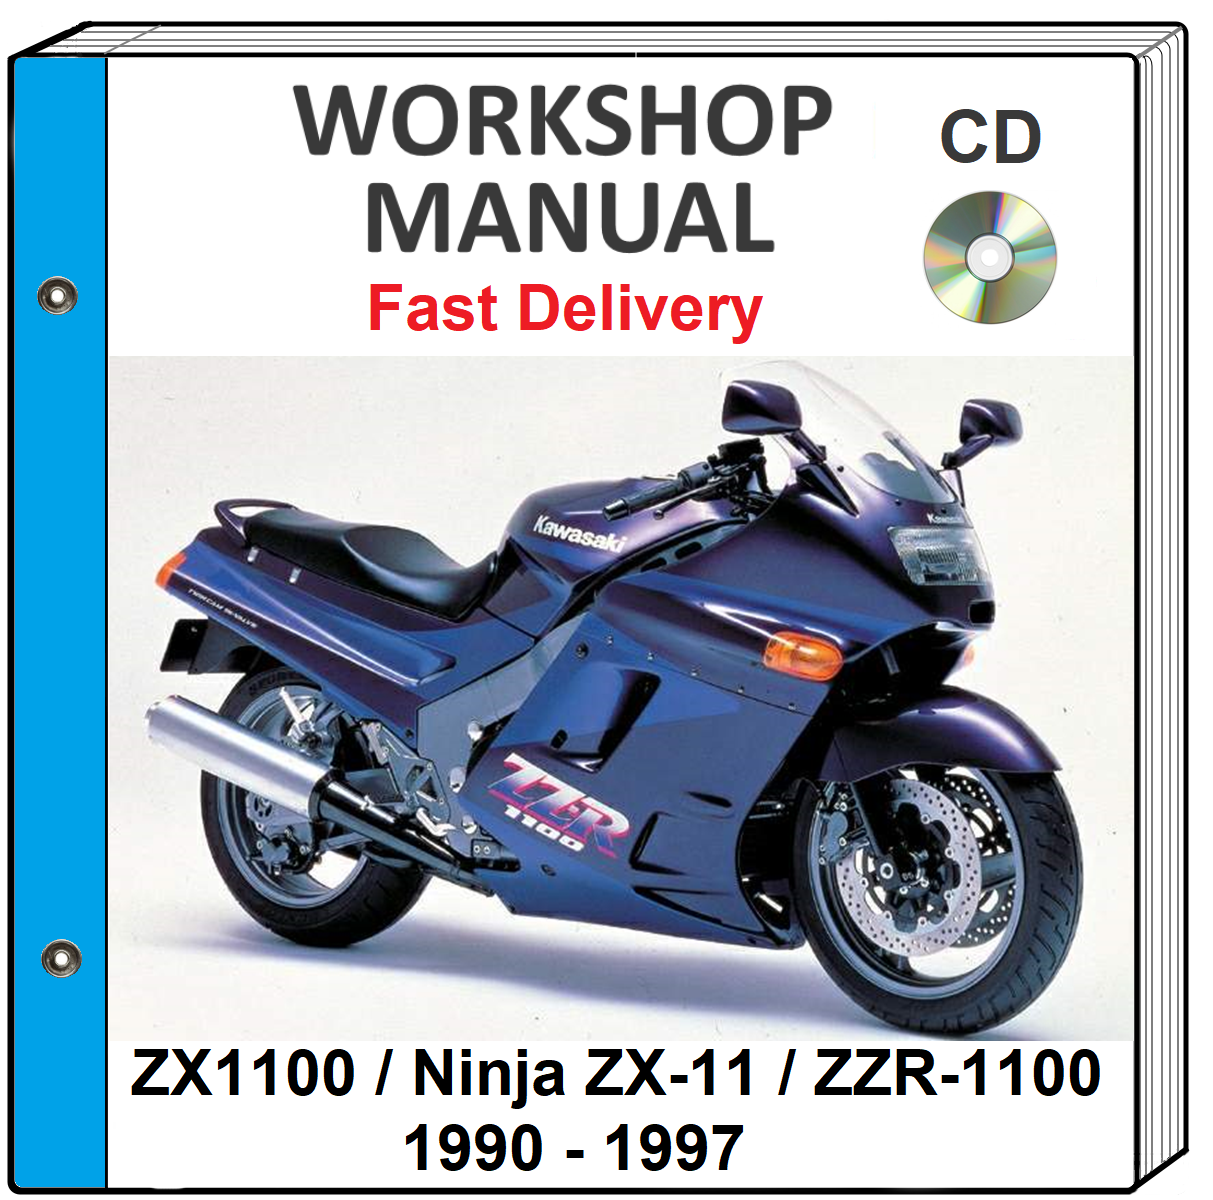 KAWASAKI NINJA ZX-11 ZZR1100 ZX1100 1990 - 1997 SERVICE REPAIR SHOP MANUAL  | eBay